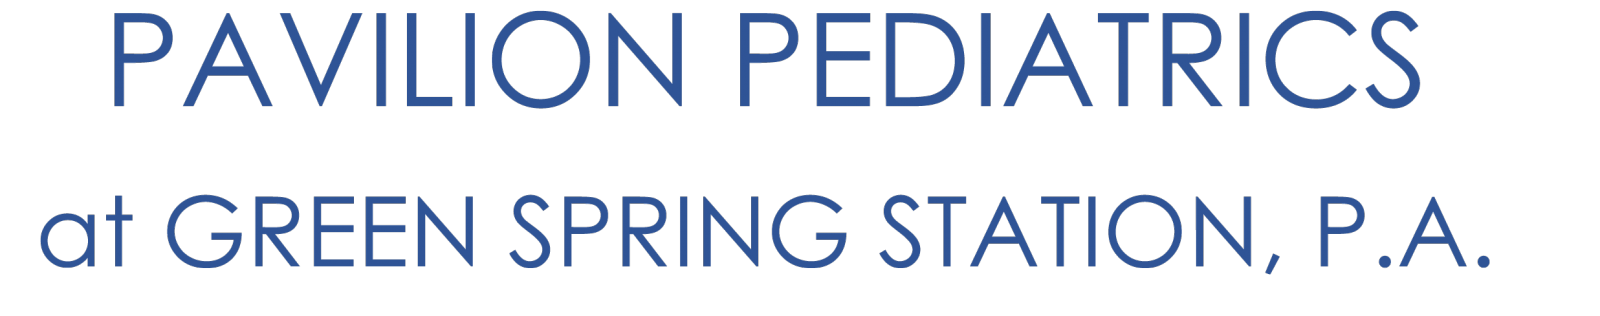 Pavilion-Pediatrics-heading